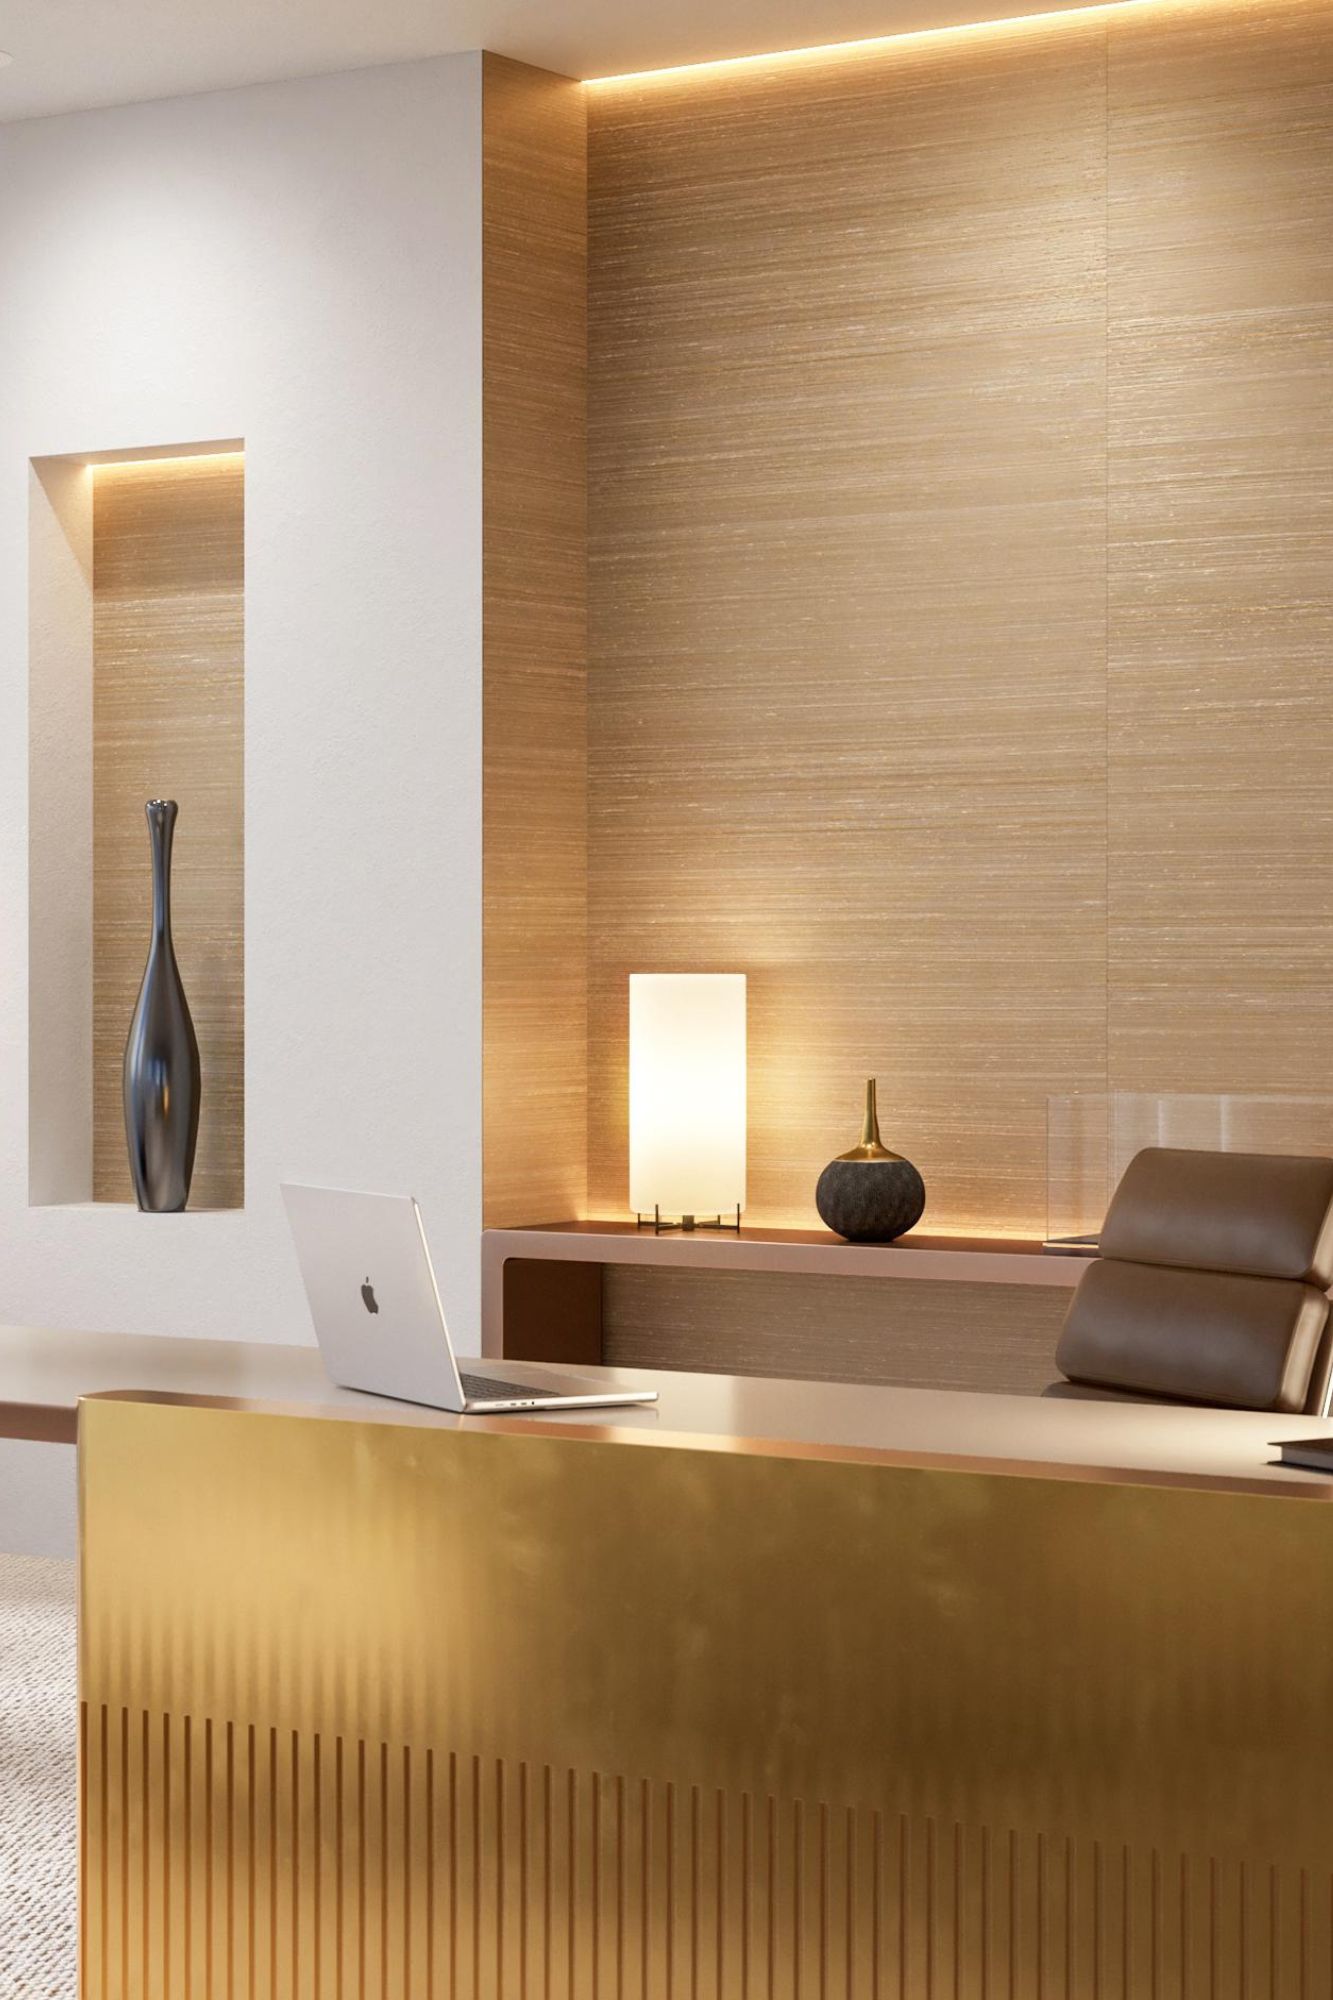 Vescom, Vescom is Bringing Natural Luxury to High-End Interiors